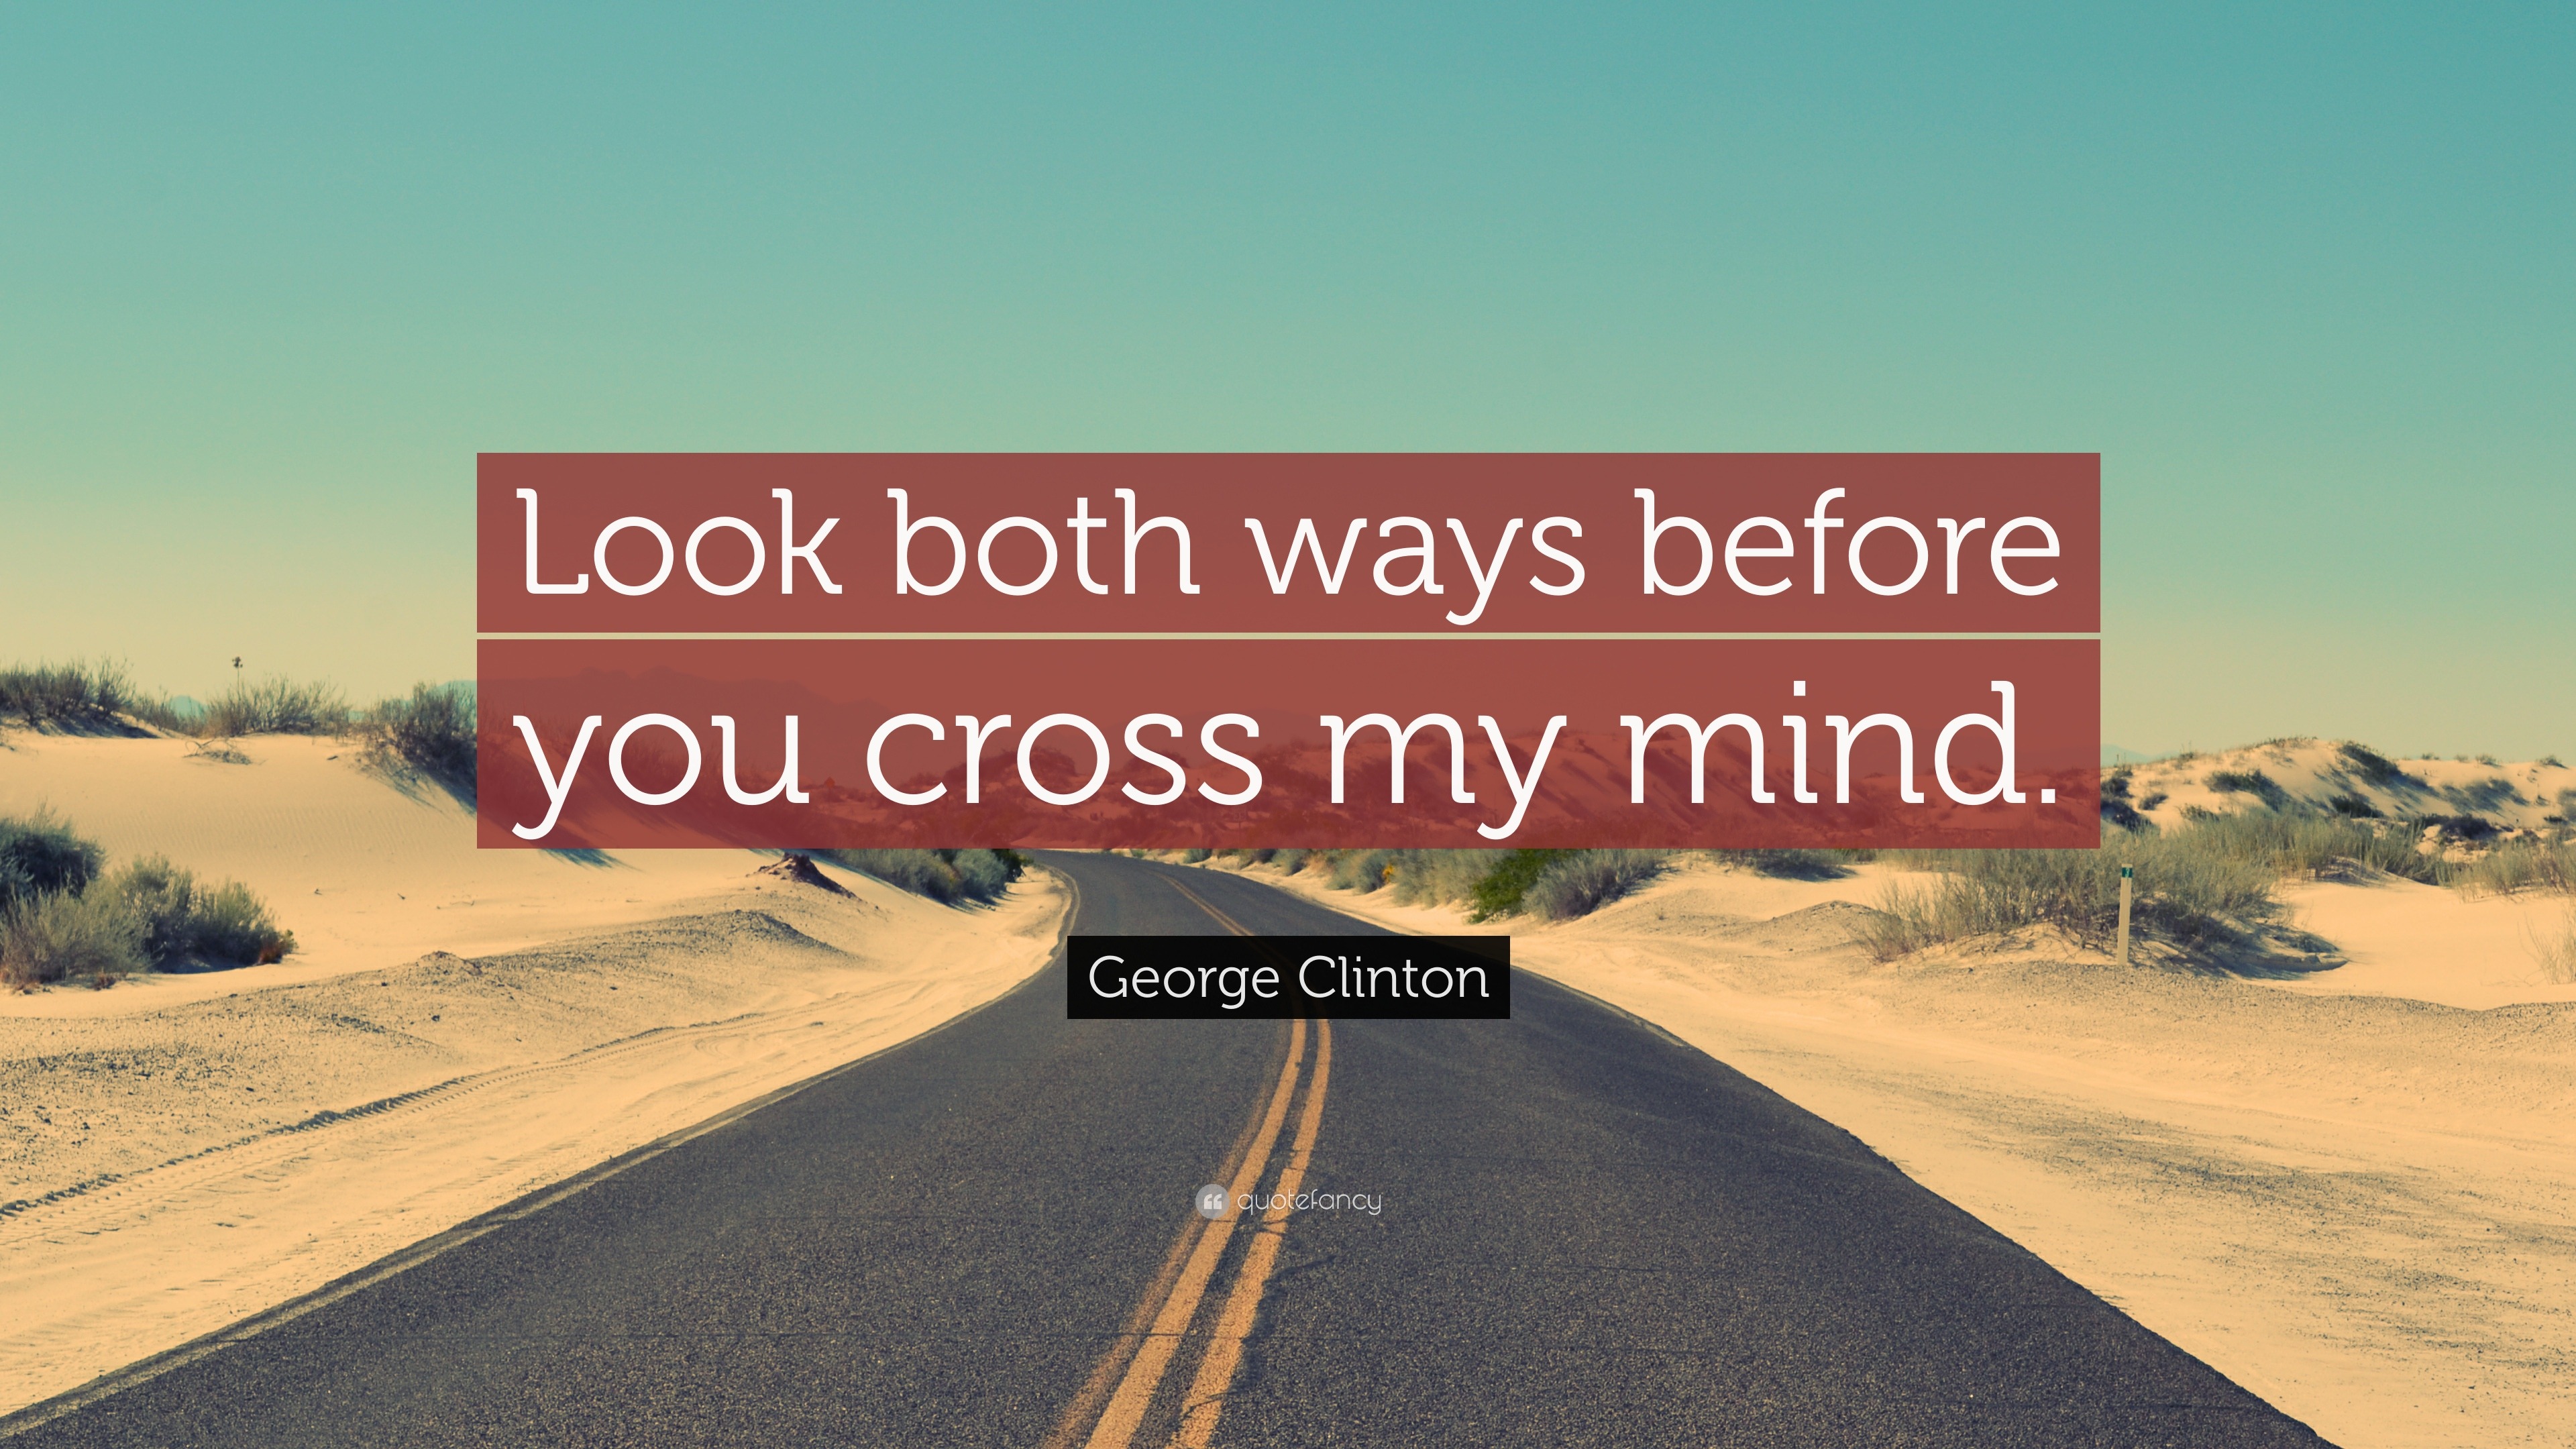 https://quotefancy.com/media/wallpaper/3840x2160/1823400-George-Clinton-Quote-Look-both-ways-before-you-cross-my-mind.jpg